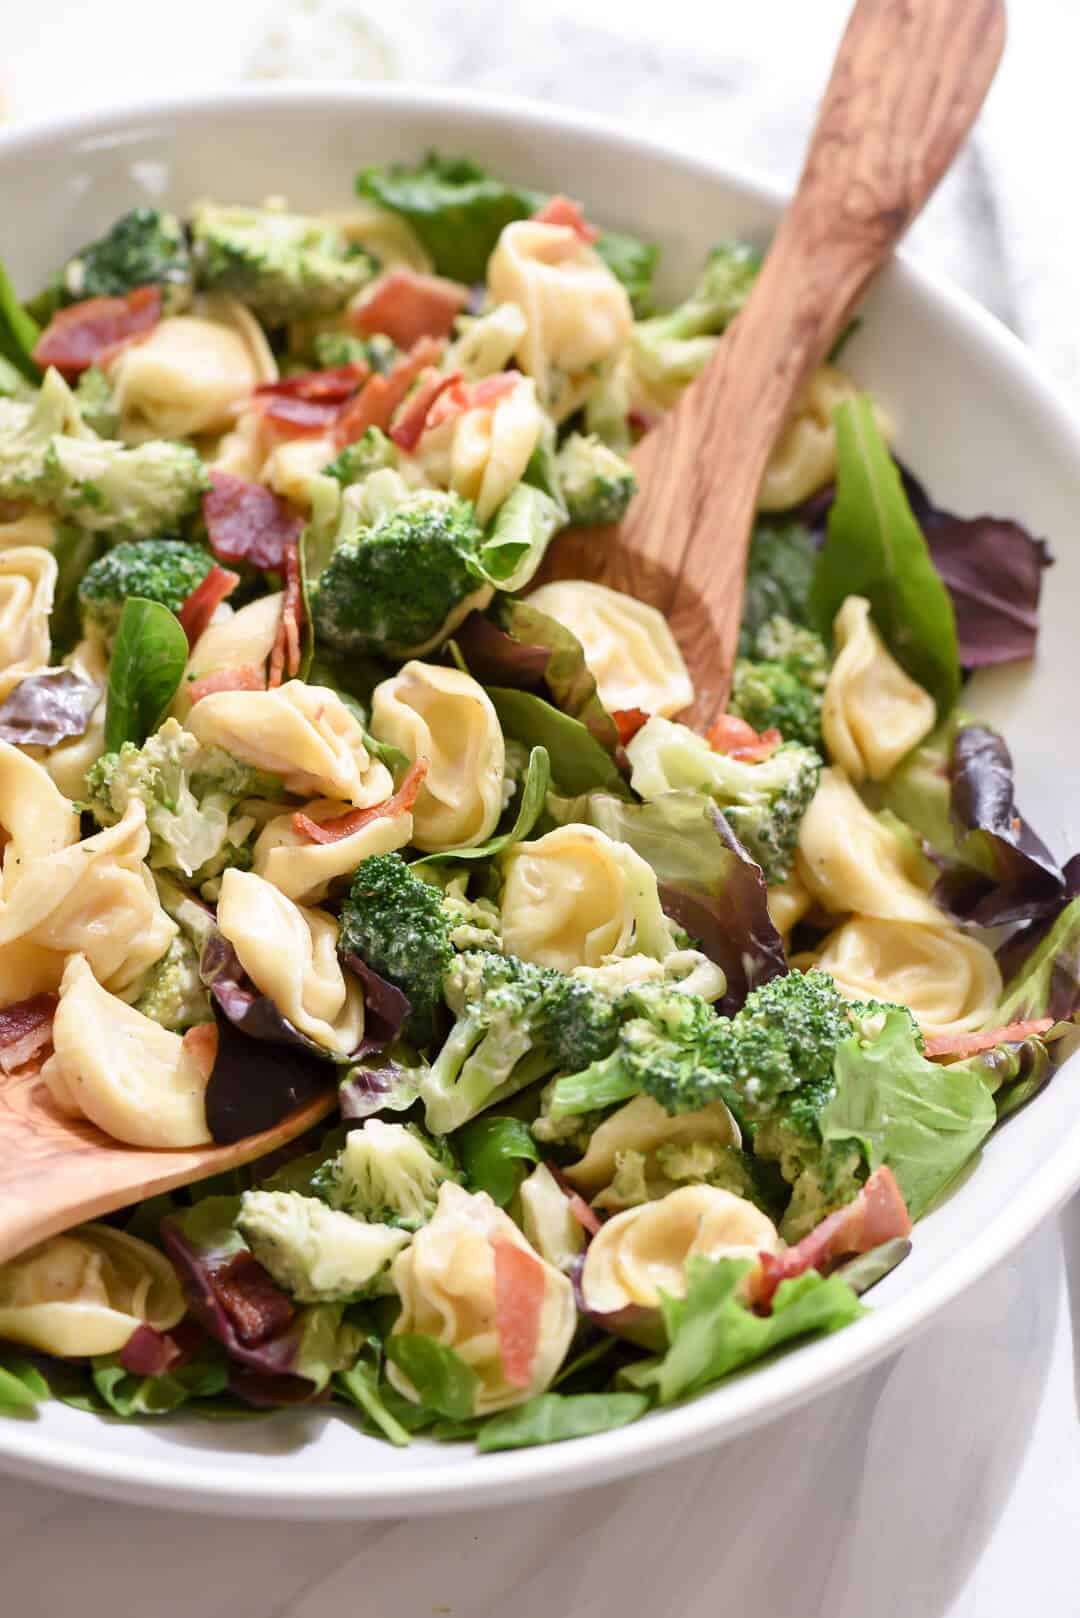 A close up image of the pasta salad